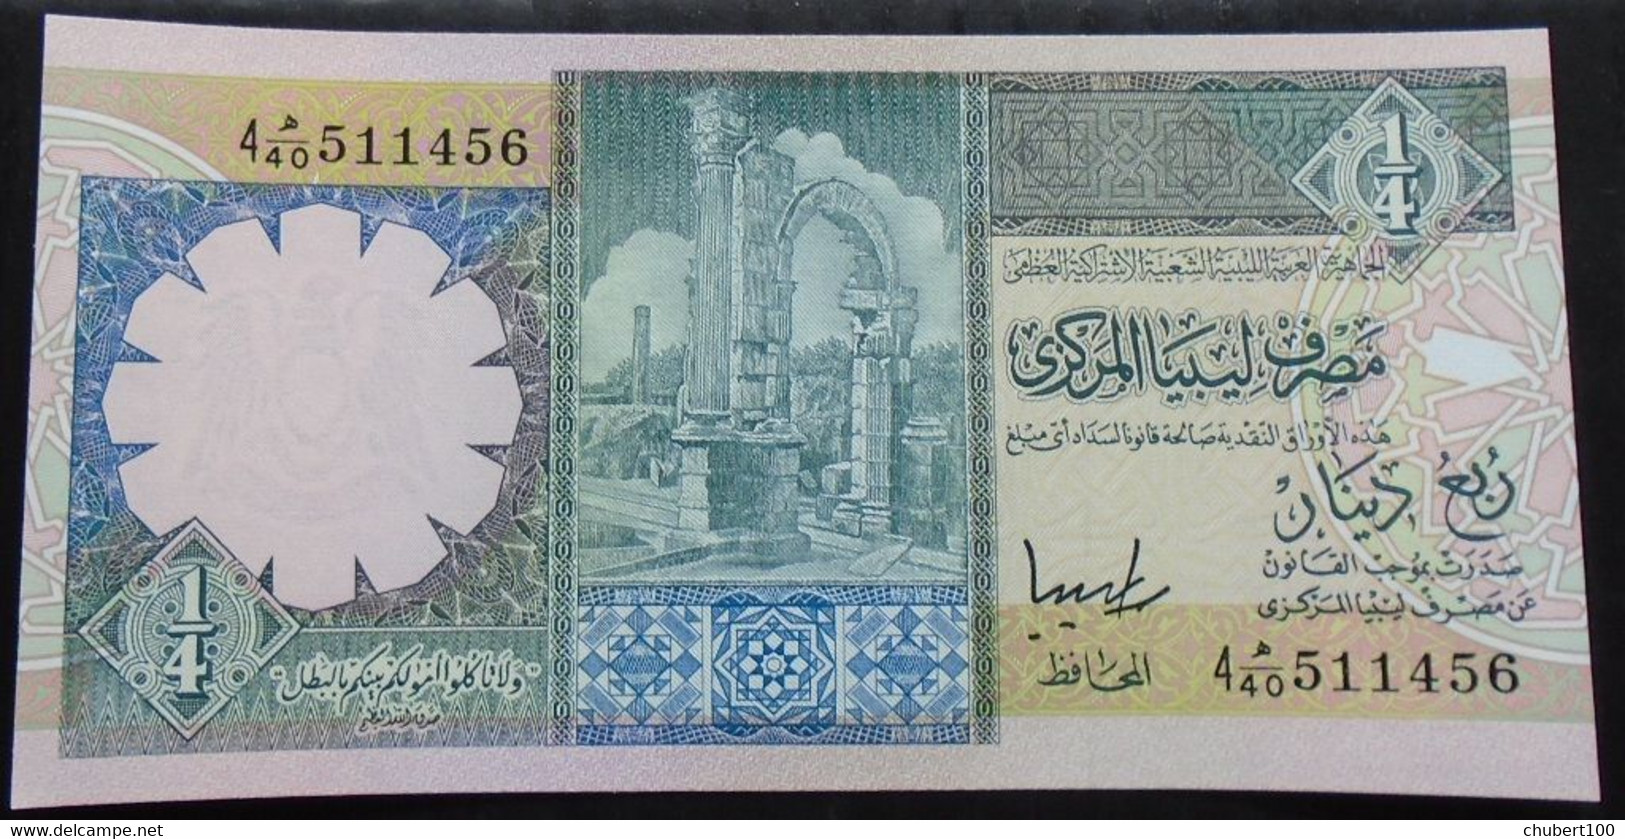 LIBYA , P 57b + 57c  ,  1/4 Dinar  ,  ND 1991 ,  UNC Neuf , 2 Notes - Libye